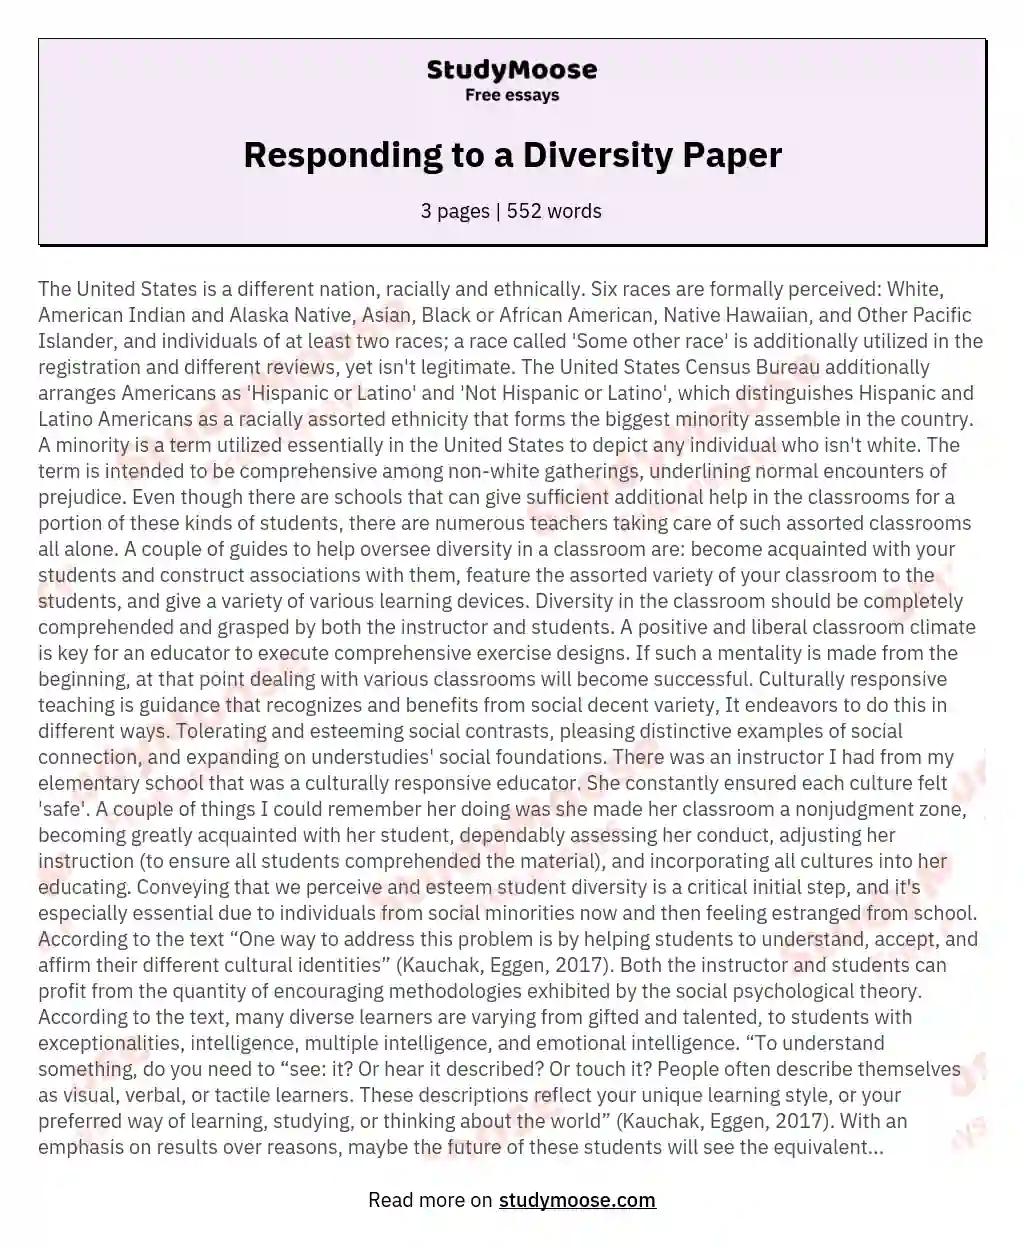 Responding to a Diversity Paper essay